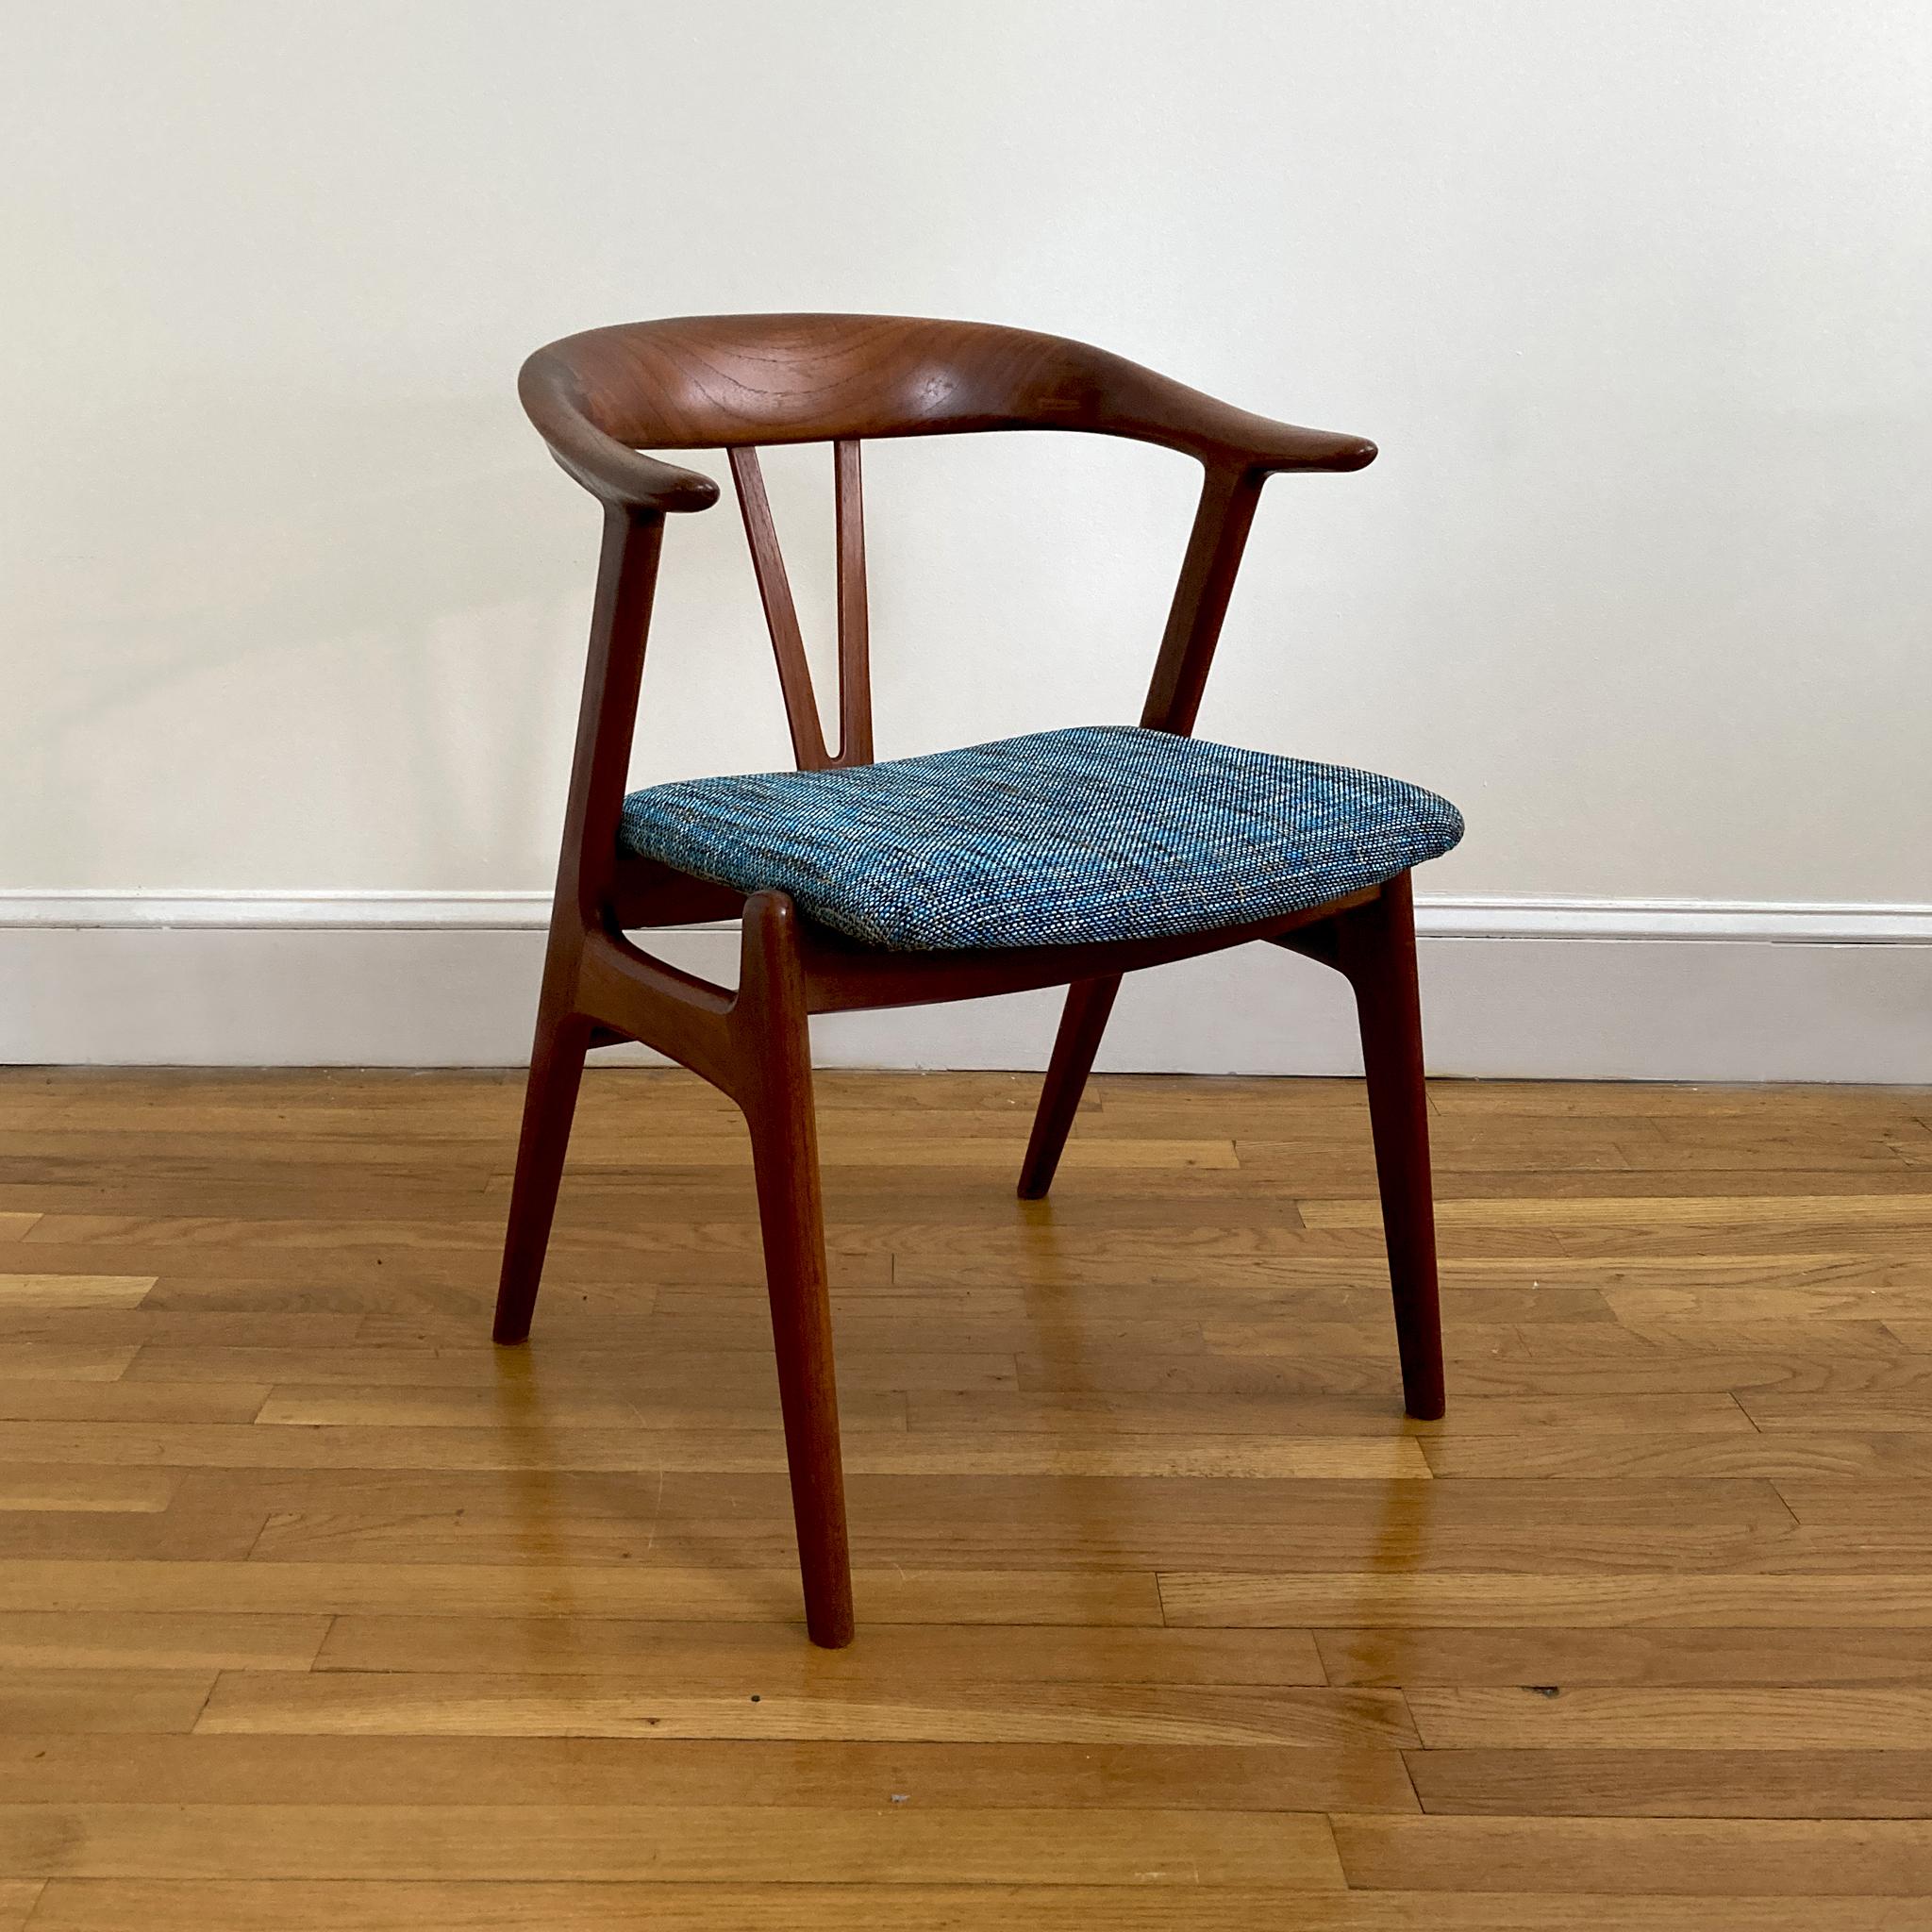 Mid-Century Modern Torbjørn Afdal Teak Form Chair with Green Teal Upholstery, 1950s For Sale